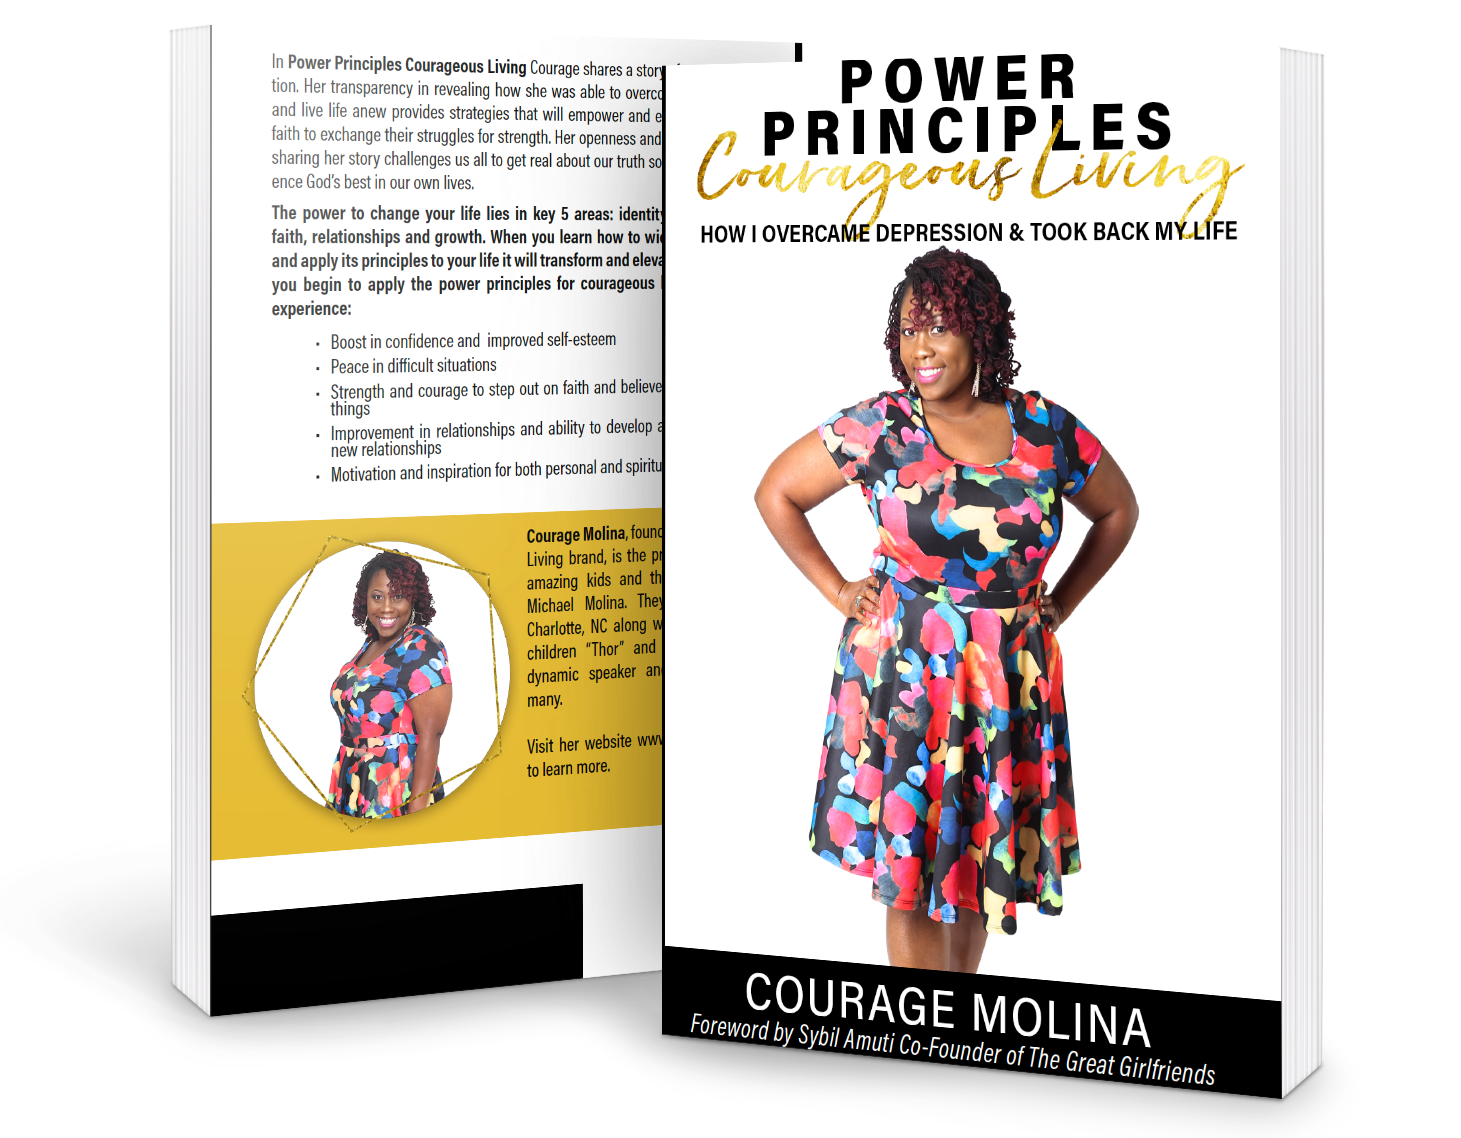 Power Principles Courageous Living - Courage Molina